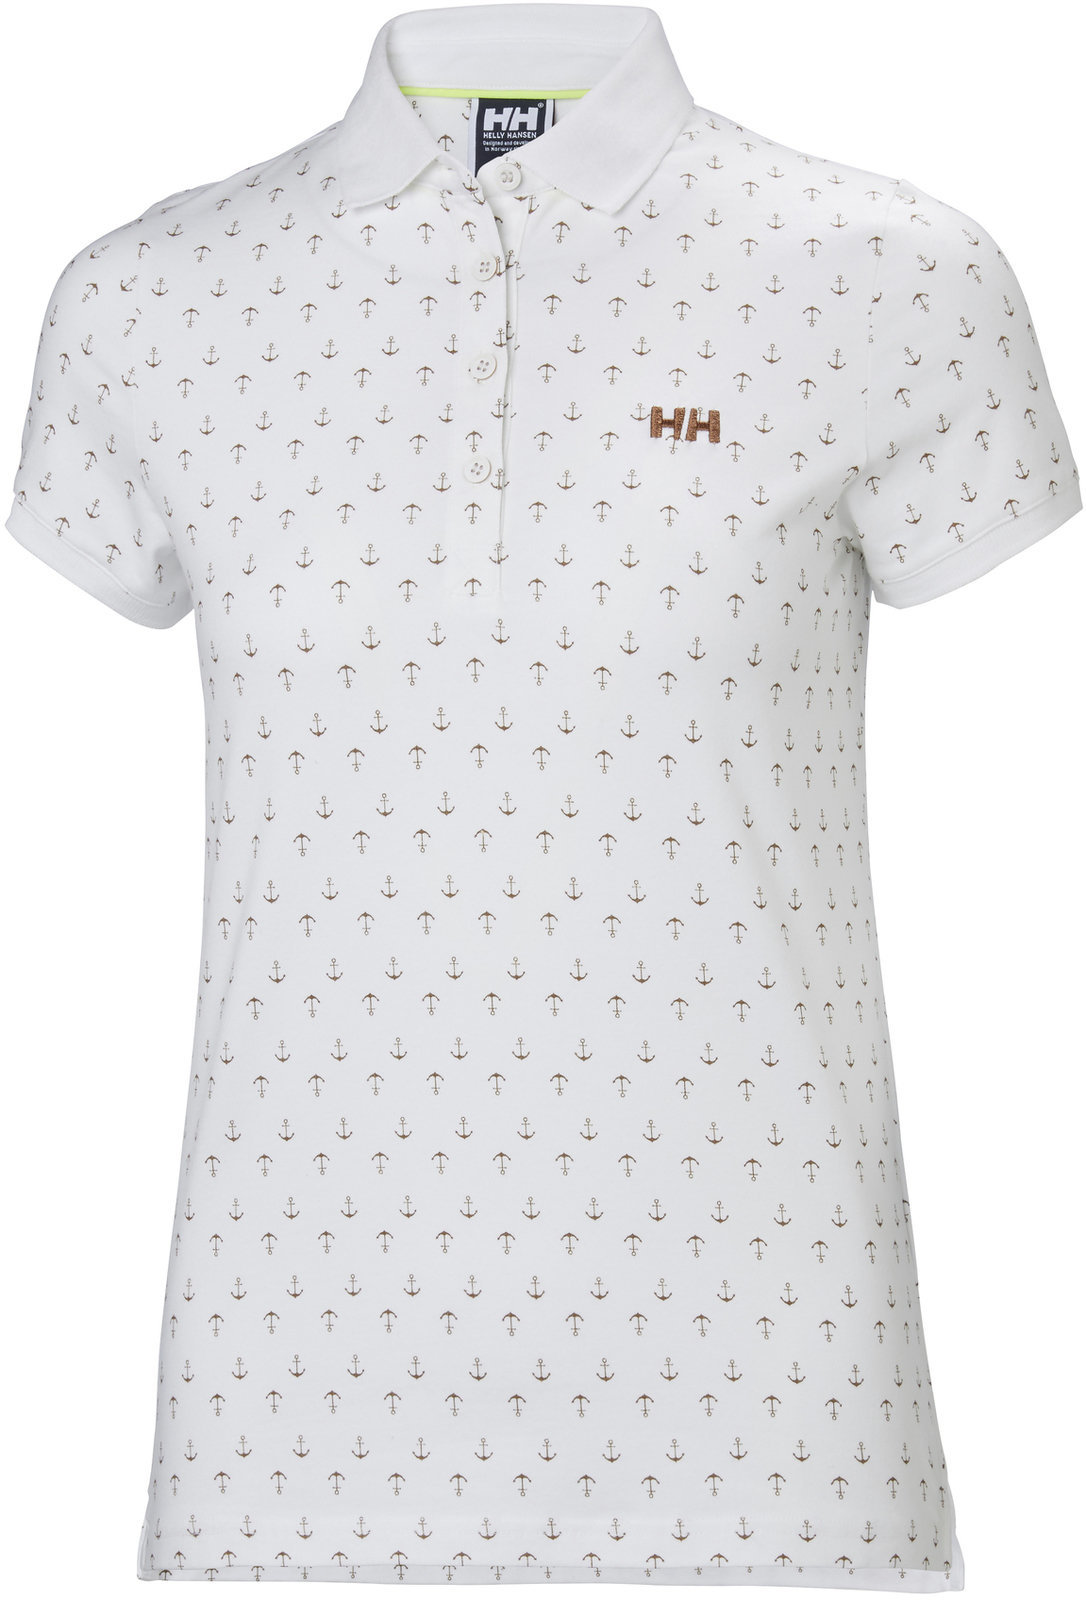 Camisa Helly Hansen W Naiad Breeze Polo White Anchor - XL